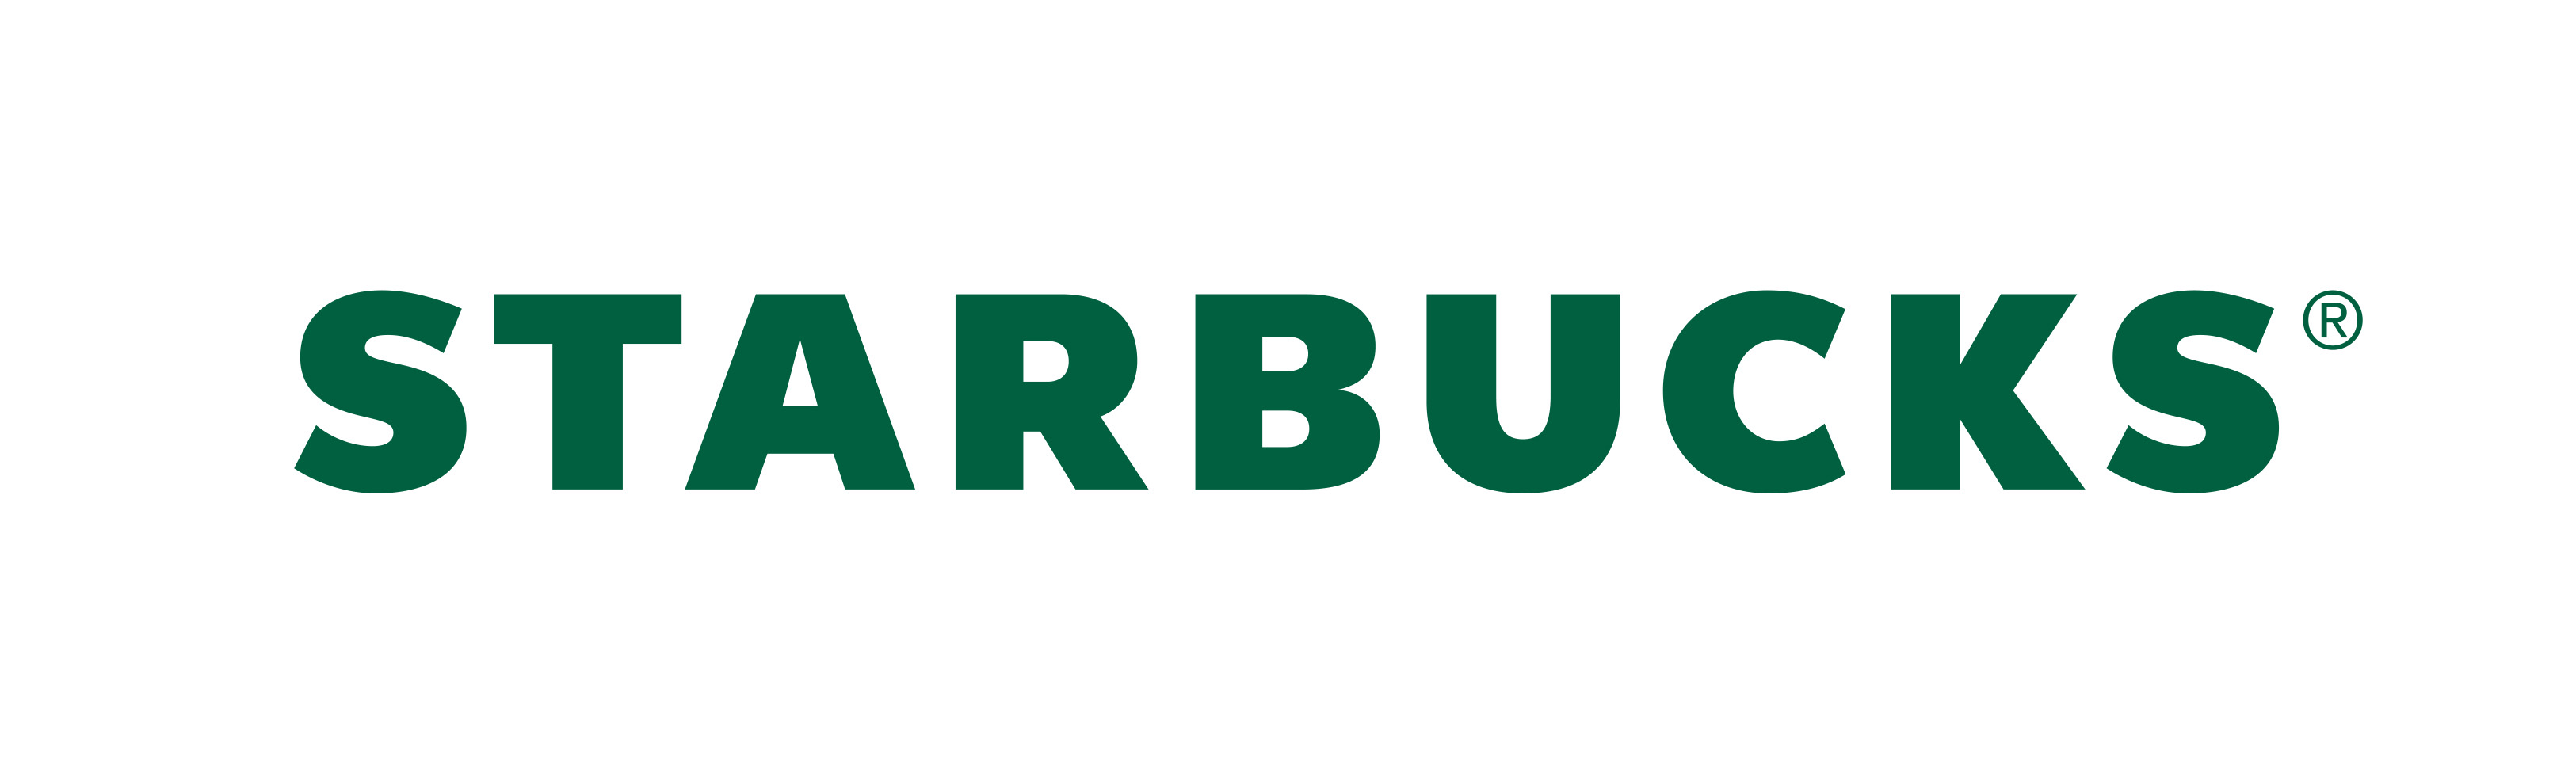 starbucksロゴ